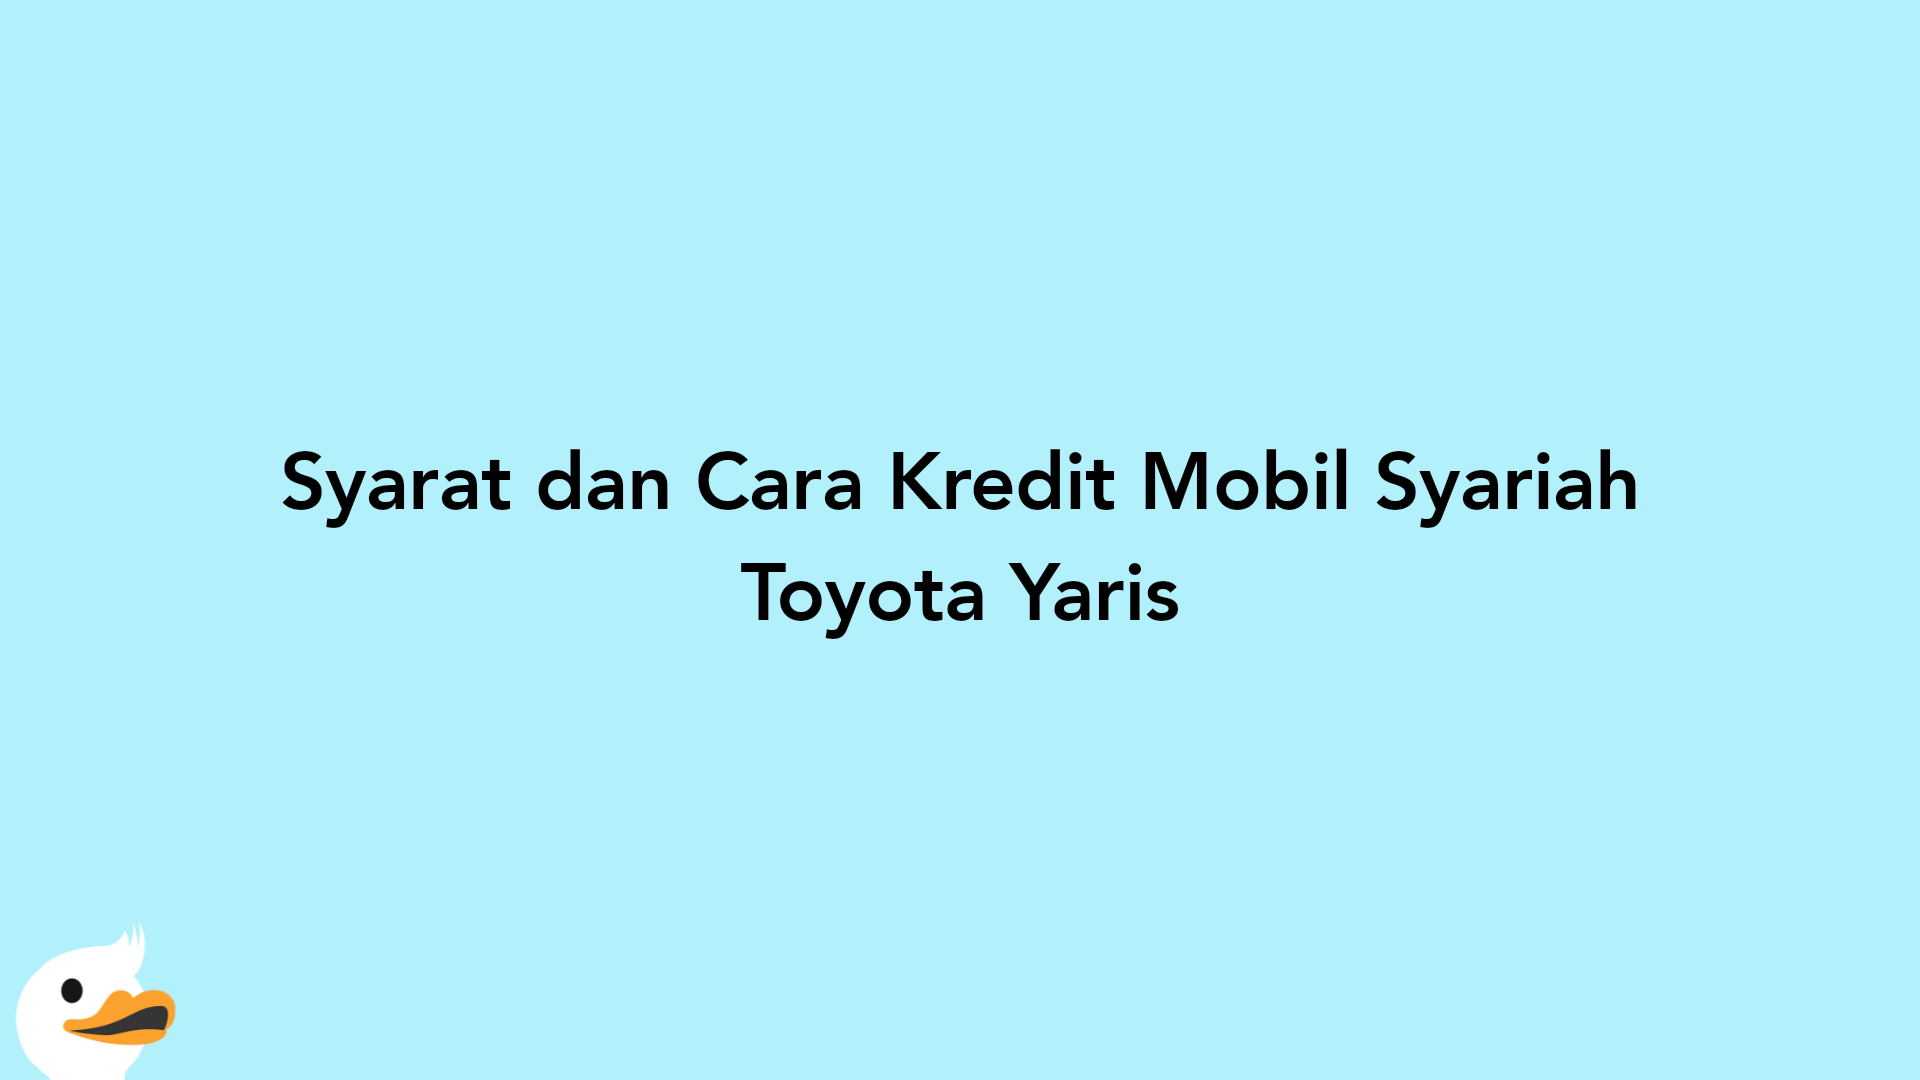 Syarat dan Cara Kredit Mobil Syariah Toyota Yaris